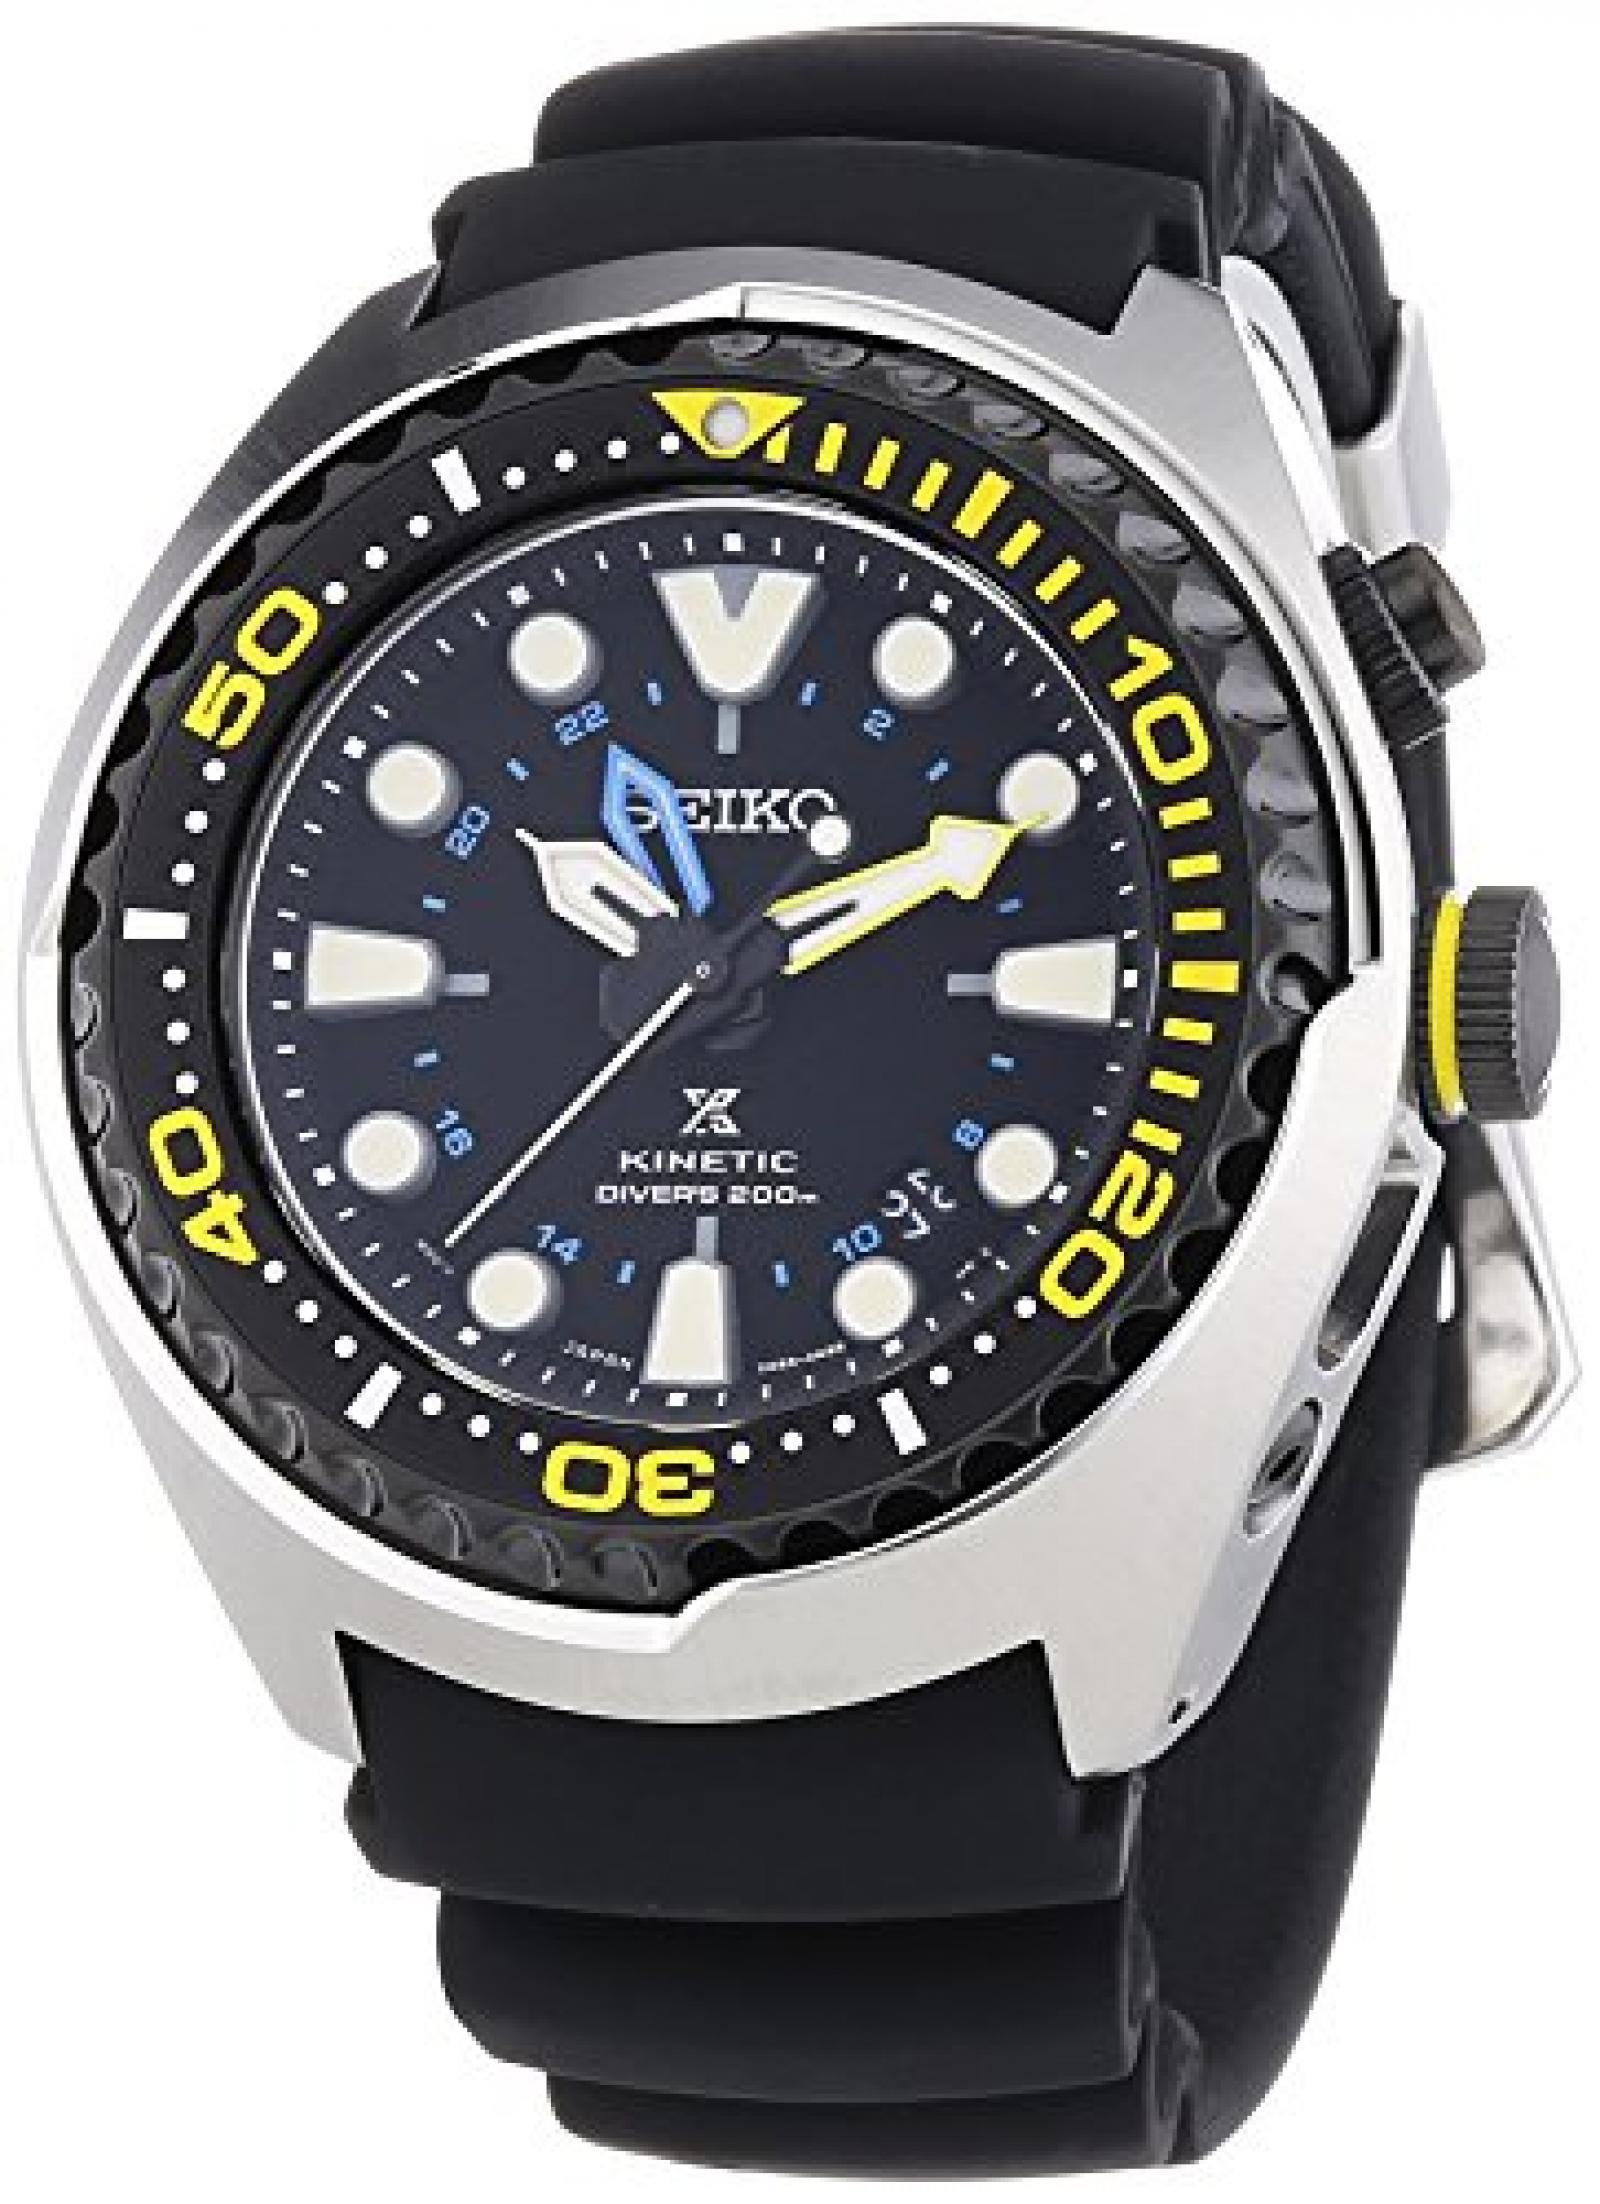 Seiko Herren-Armbanduhr XL Kinetic Diver Chronograph Quarz Plastik SUN021P1 